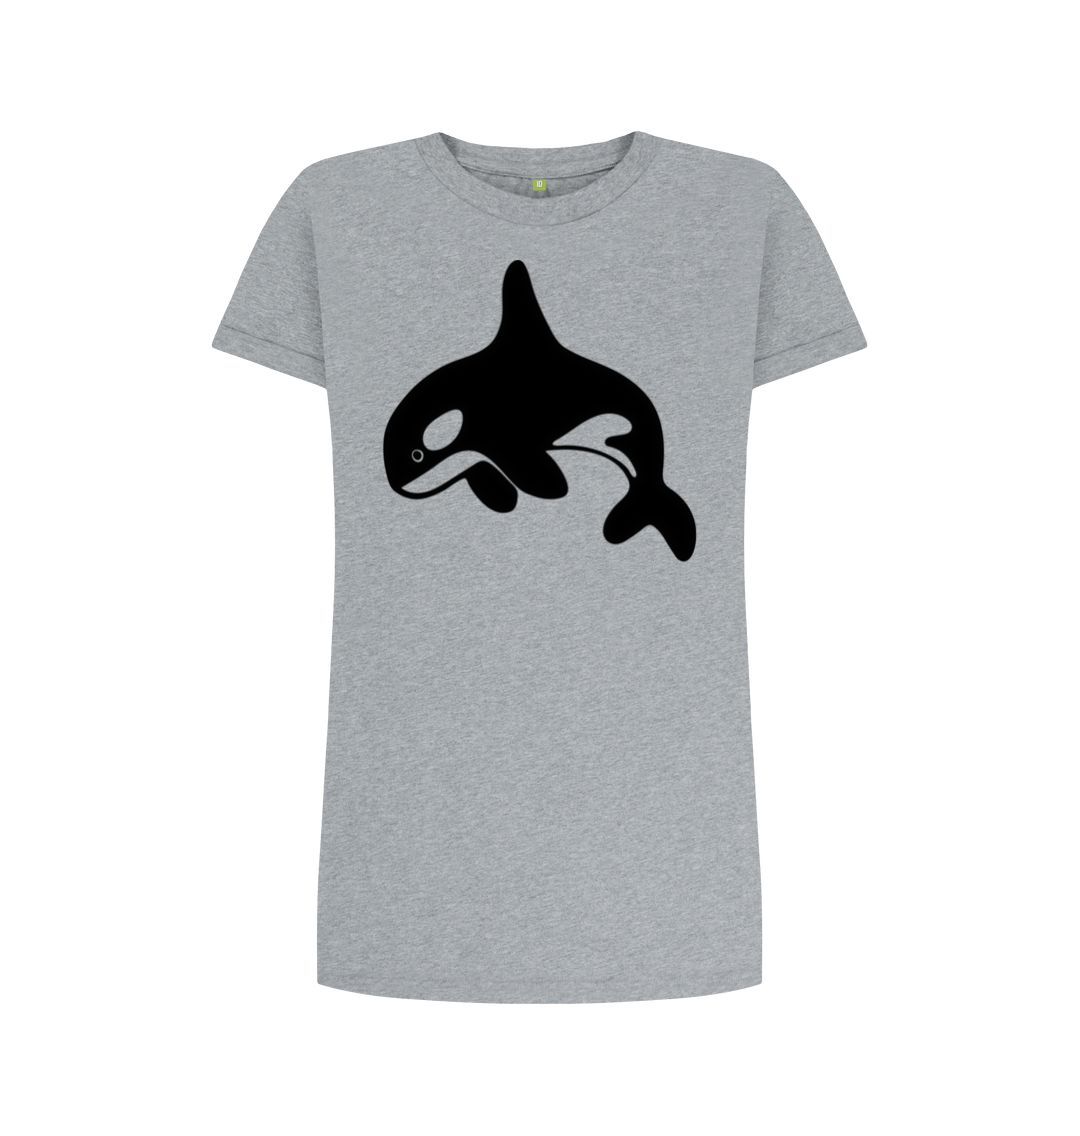 Athletic Grey Orca Women's T-Shirt Dress